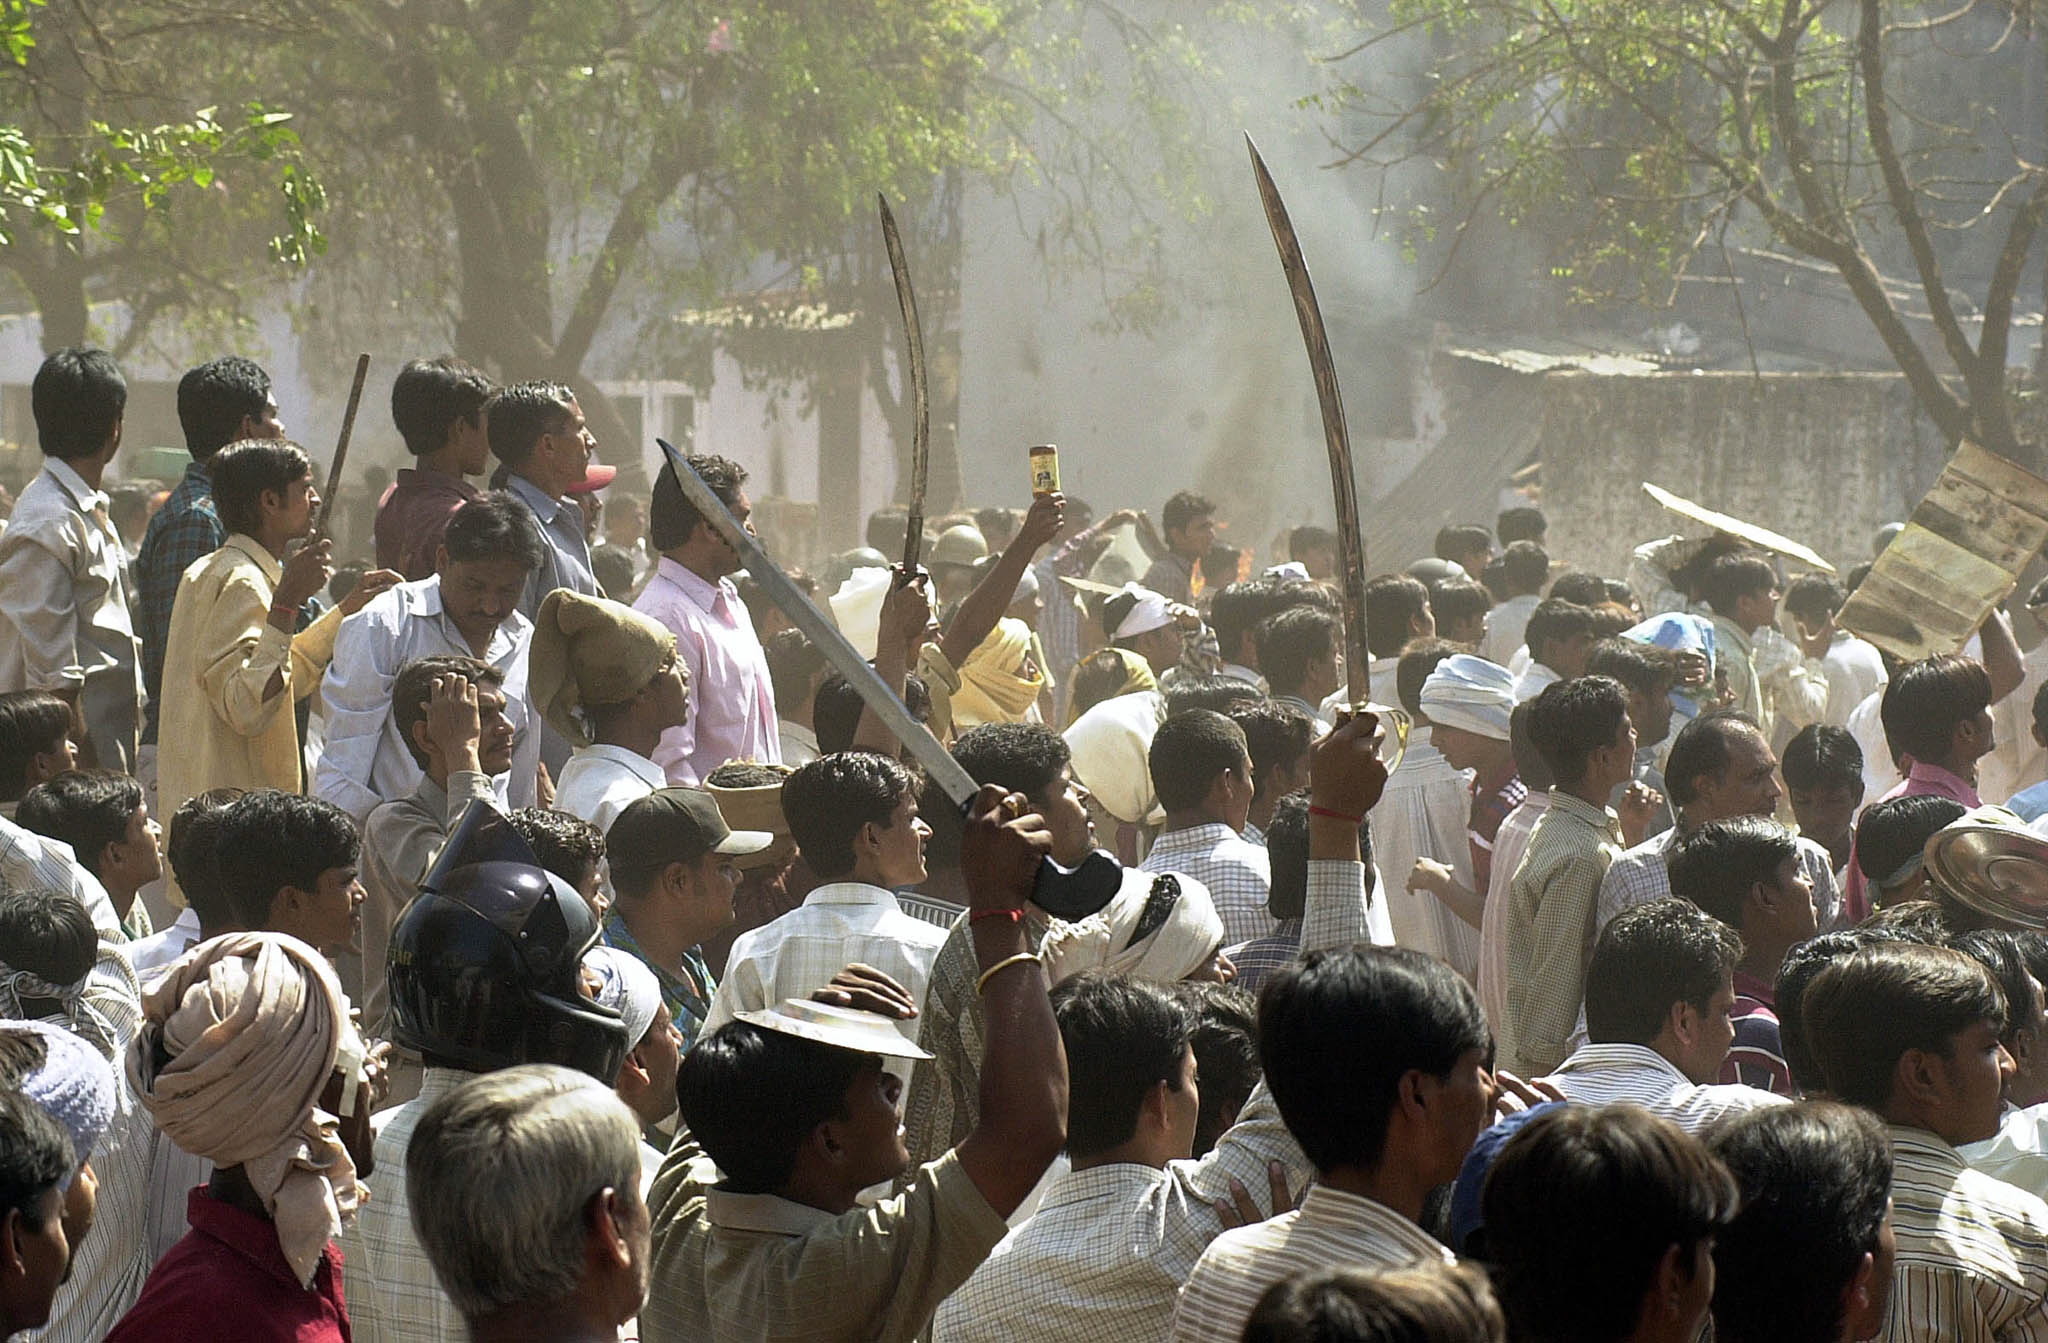 Hinduk indulnak muzulmánok ellen Gujaratban 2002 március 1-én